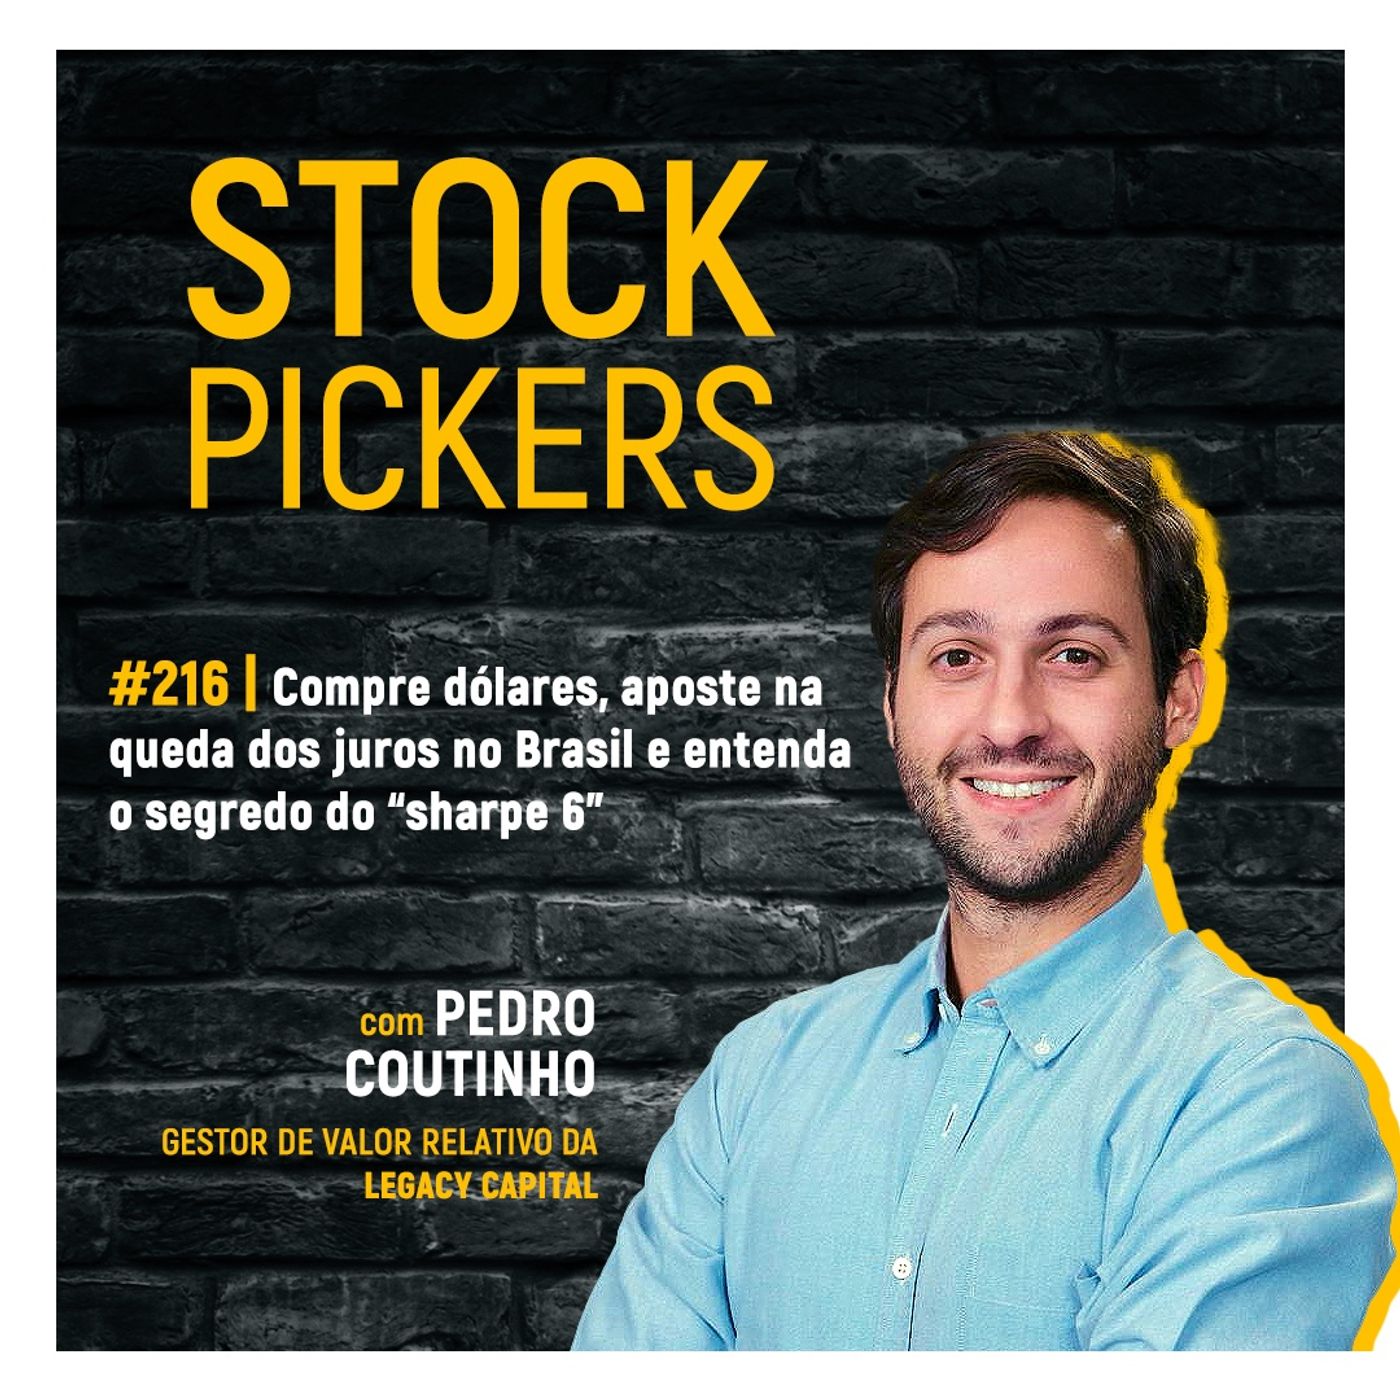 #216 Compre dólares, aposte na queda dos juros no Brasil e entenda o segredo do ”sharpe 6”